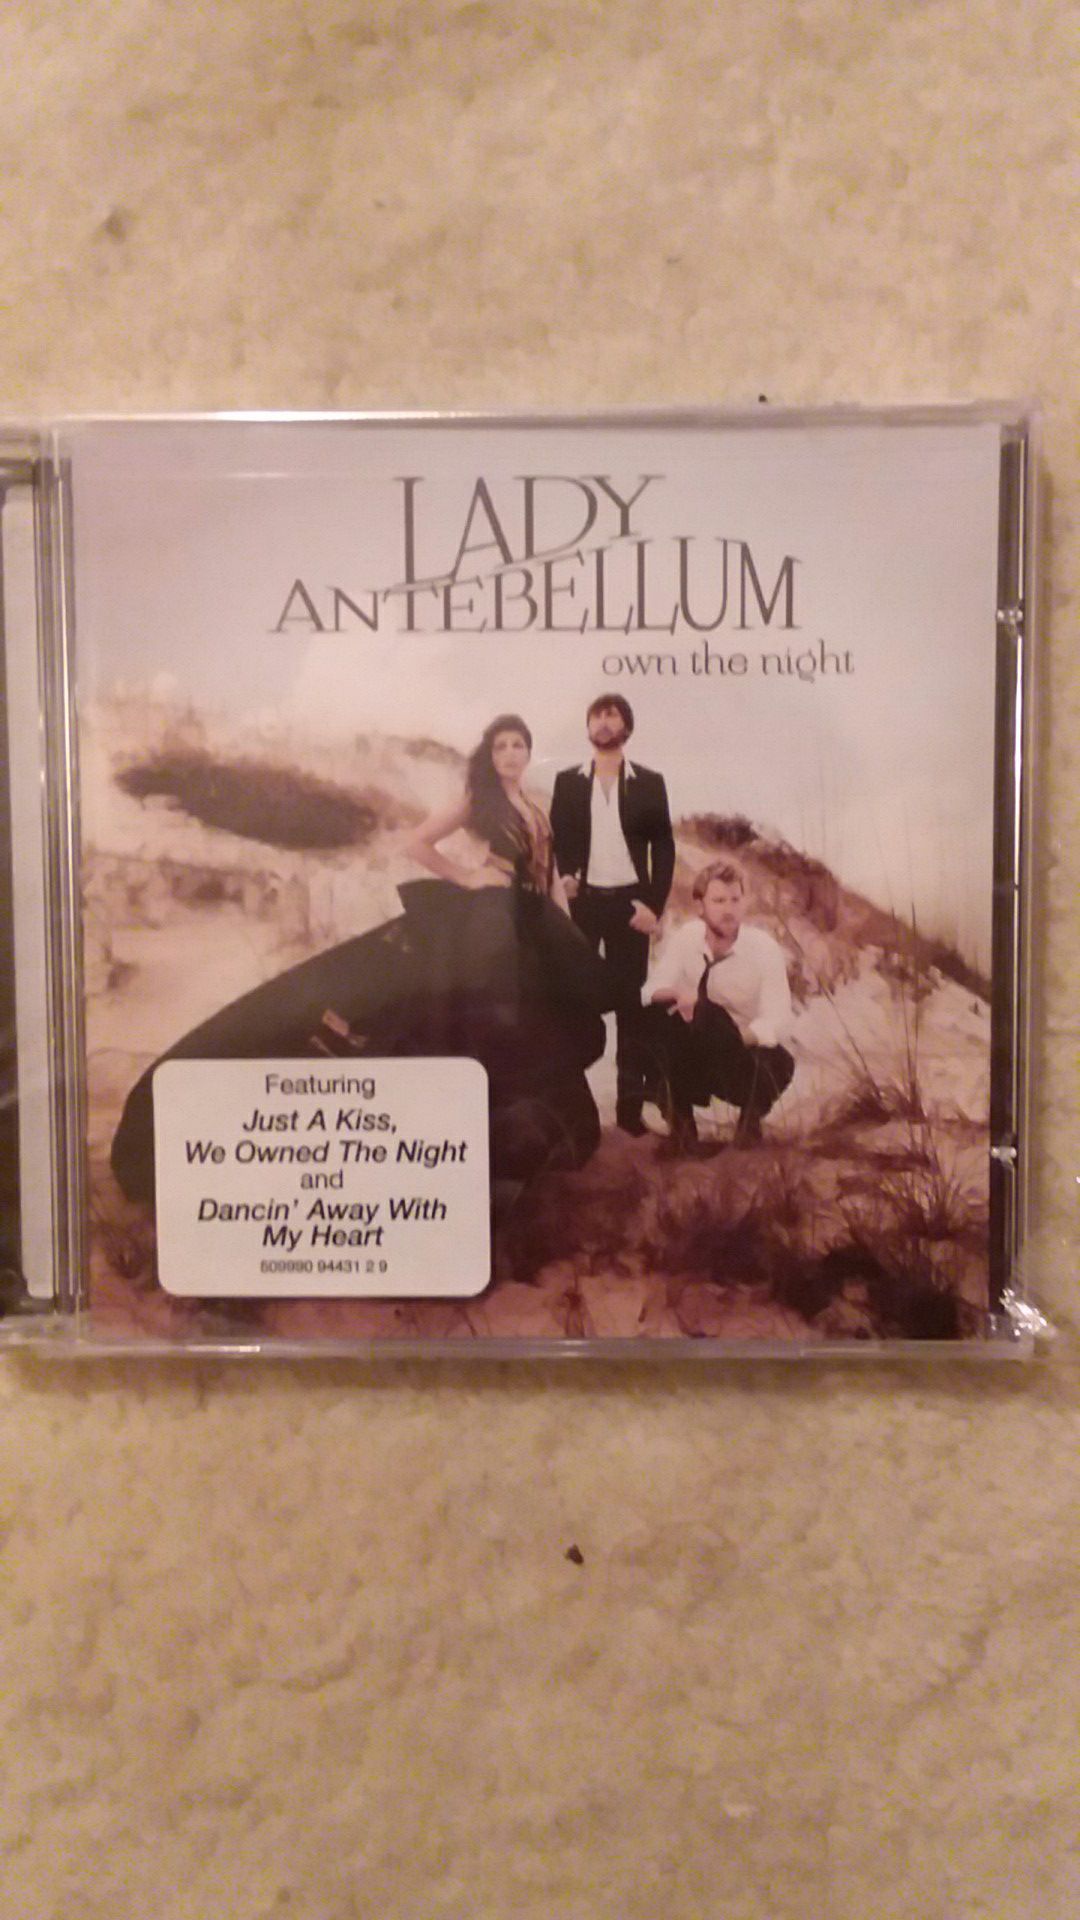 LADY ANTEBELLUM (2011) "0WN THE NIGHT" NEW SEALED CD